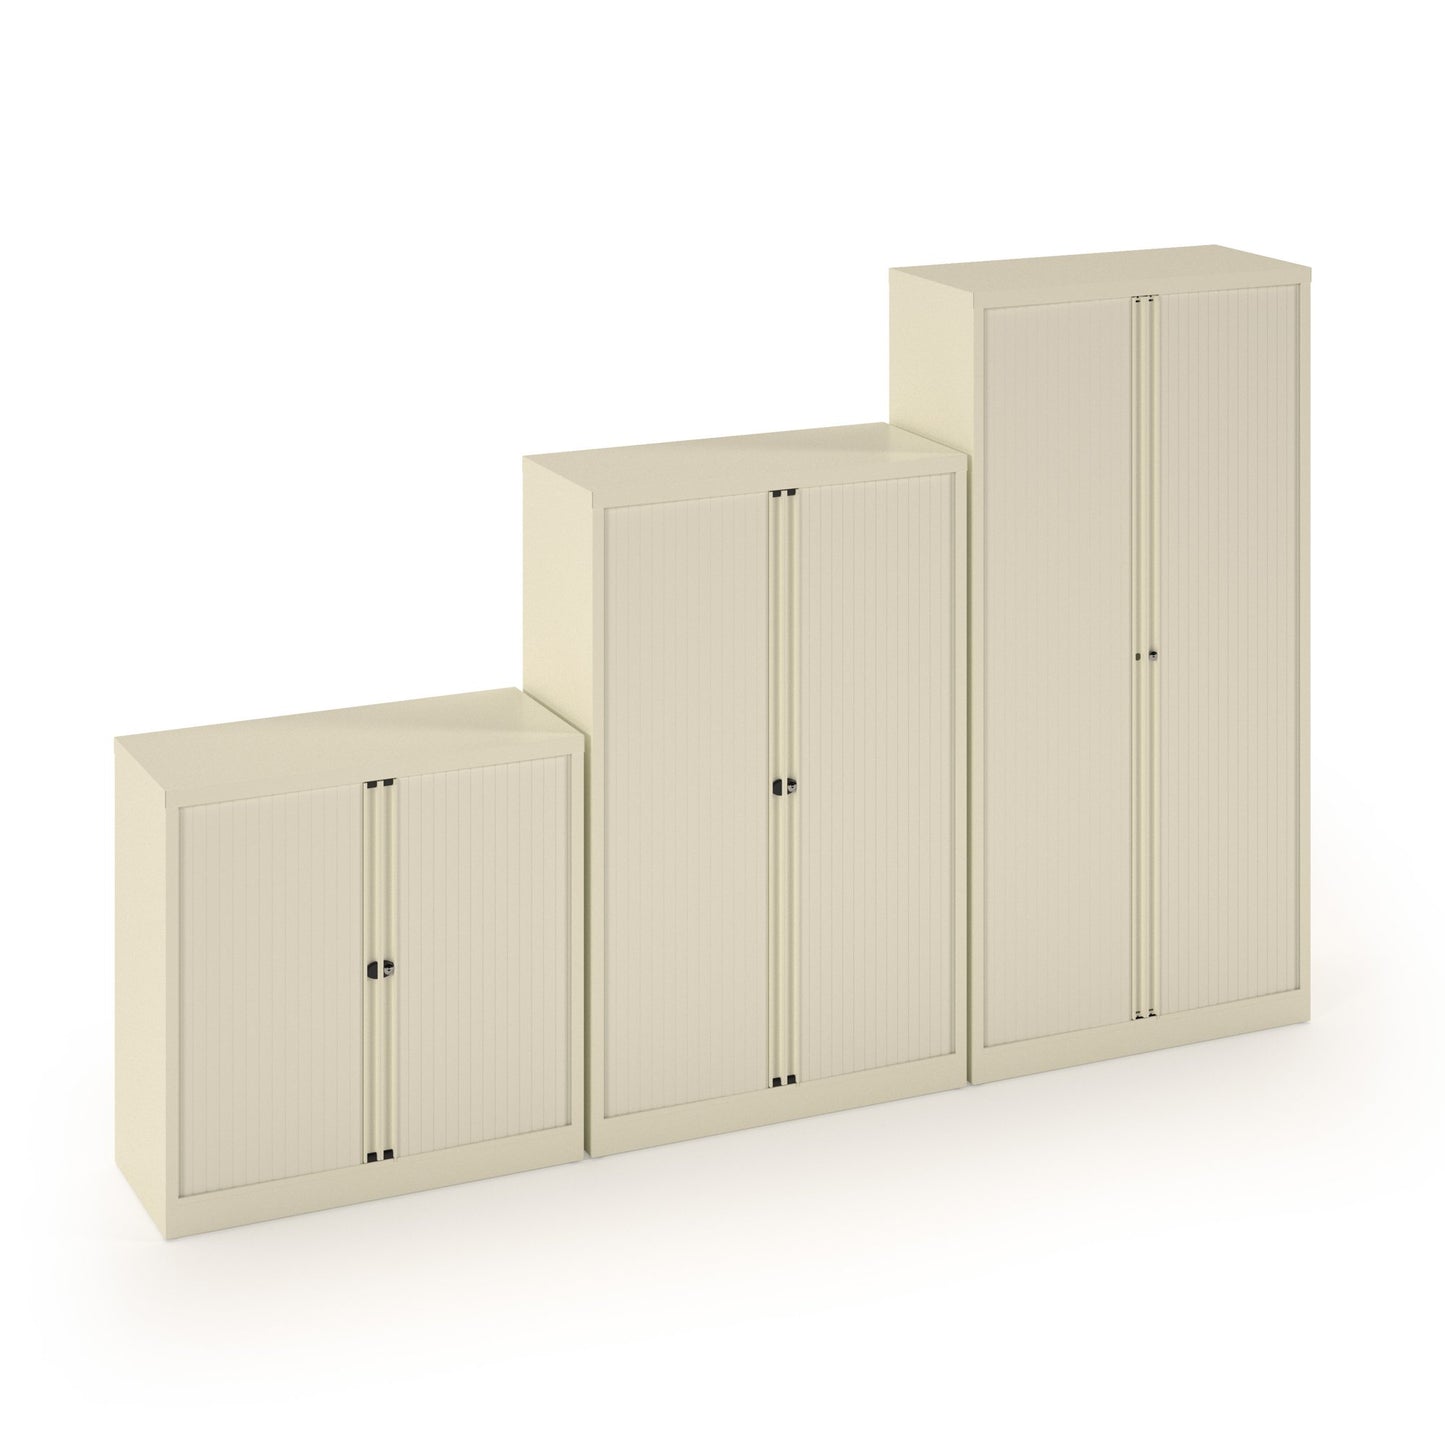 Bisley Systems Storage Tambour Cupboard 1970mm High - White